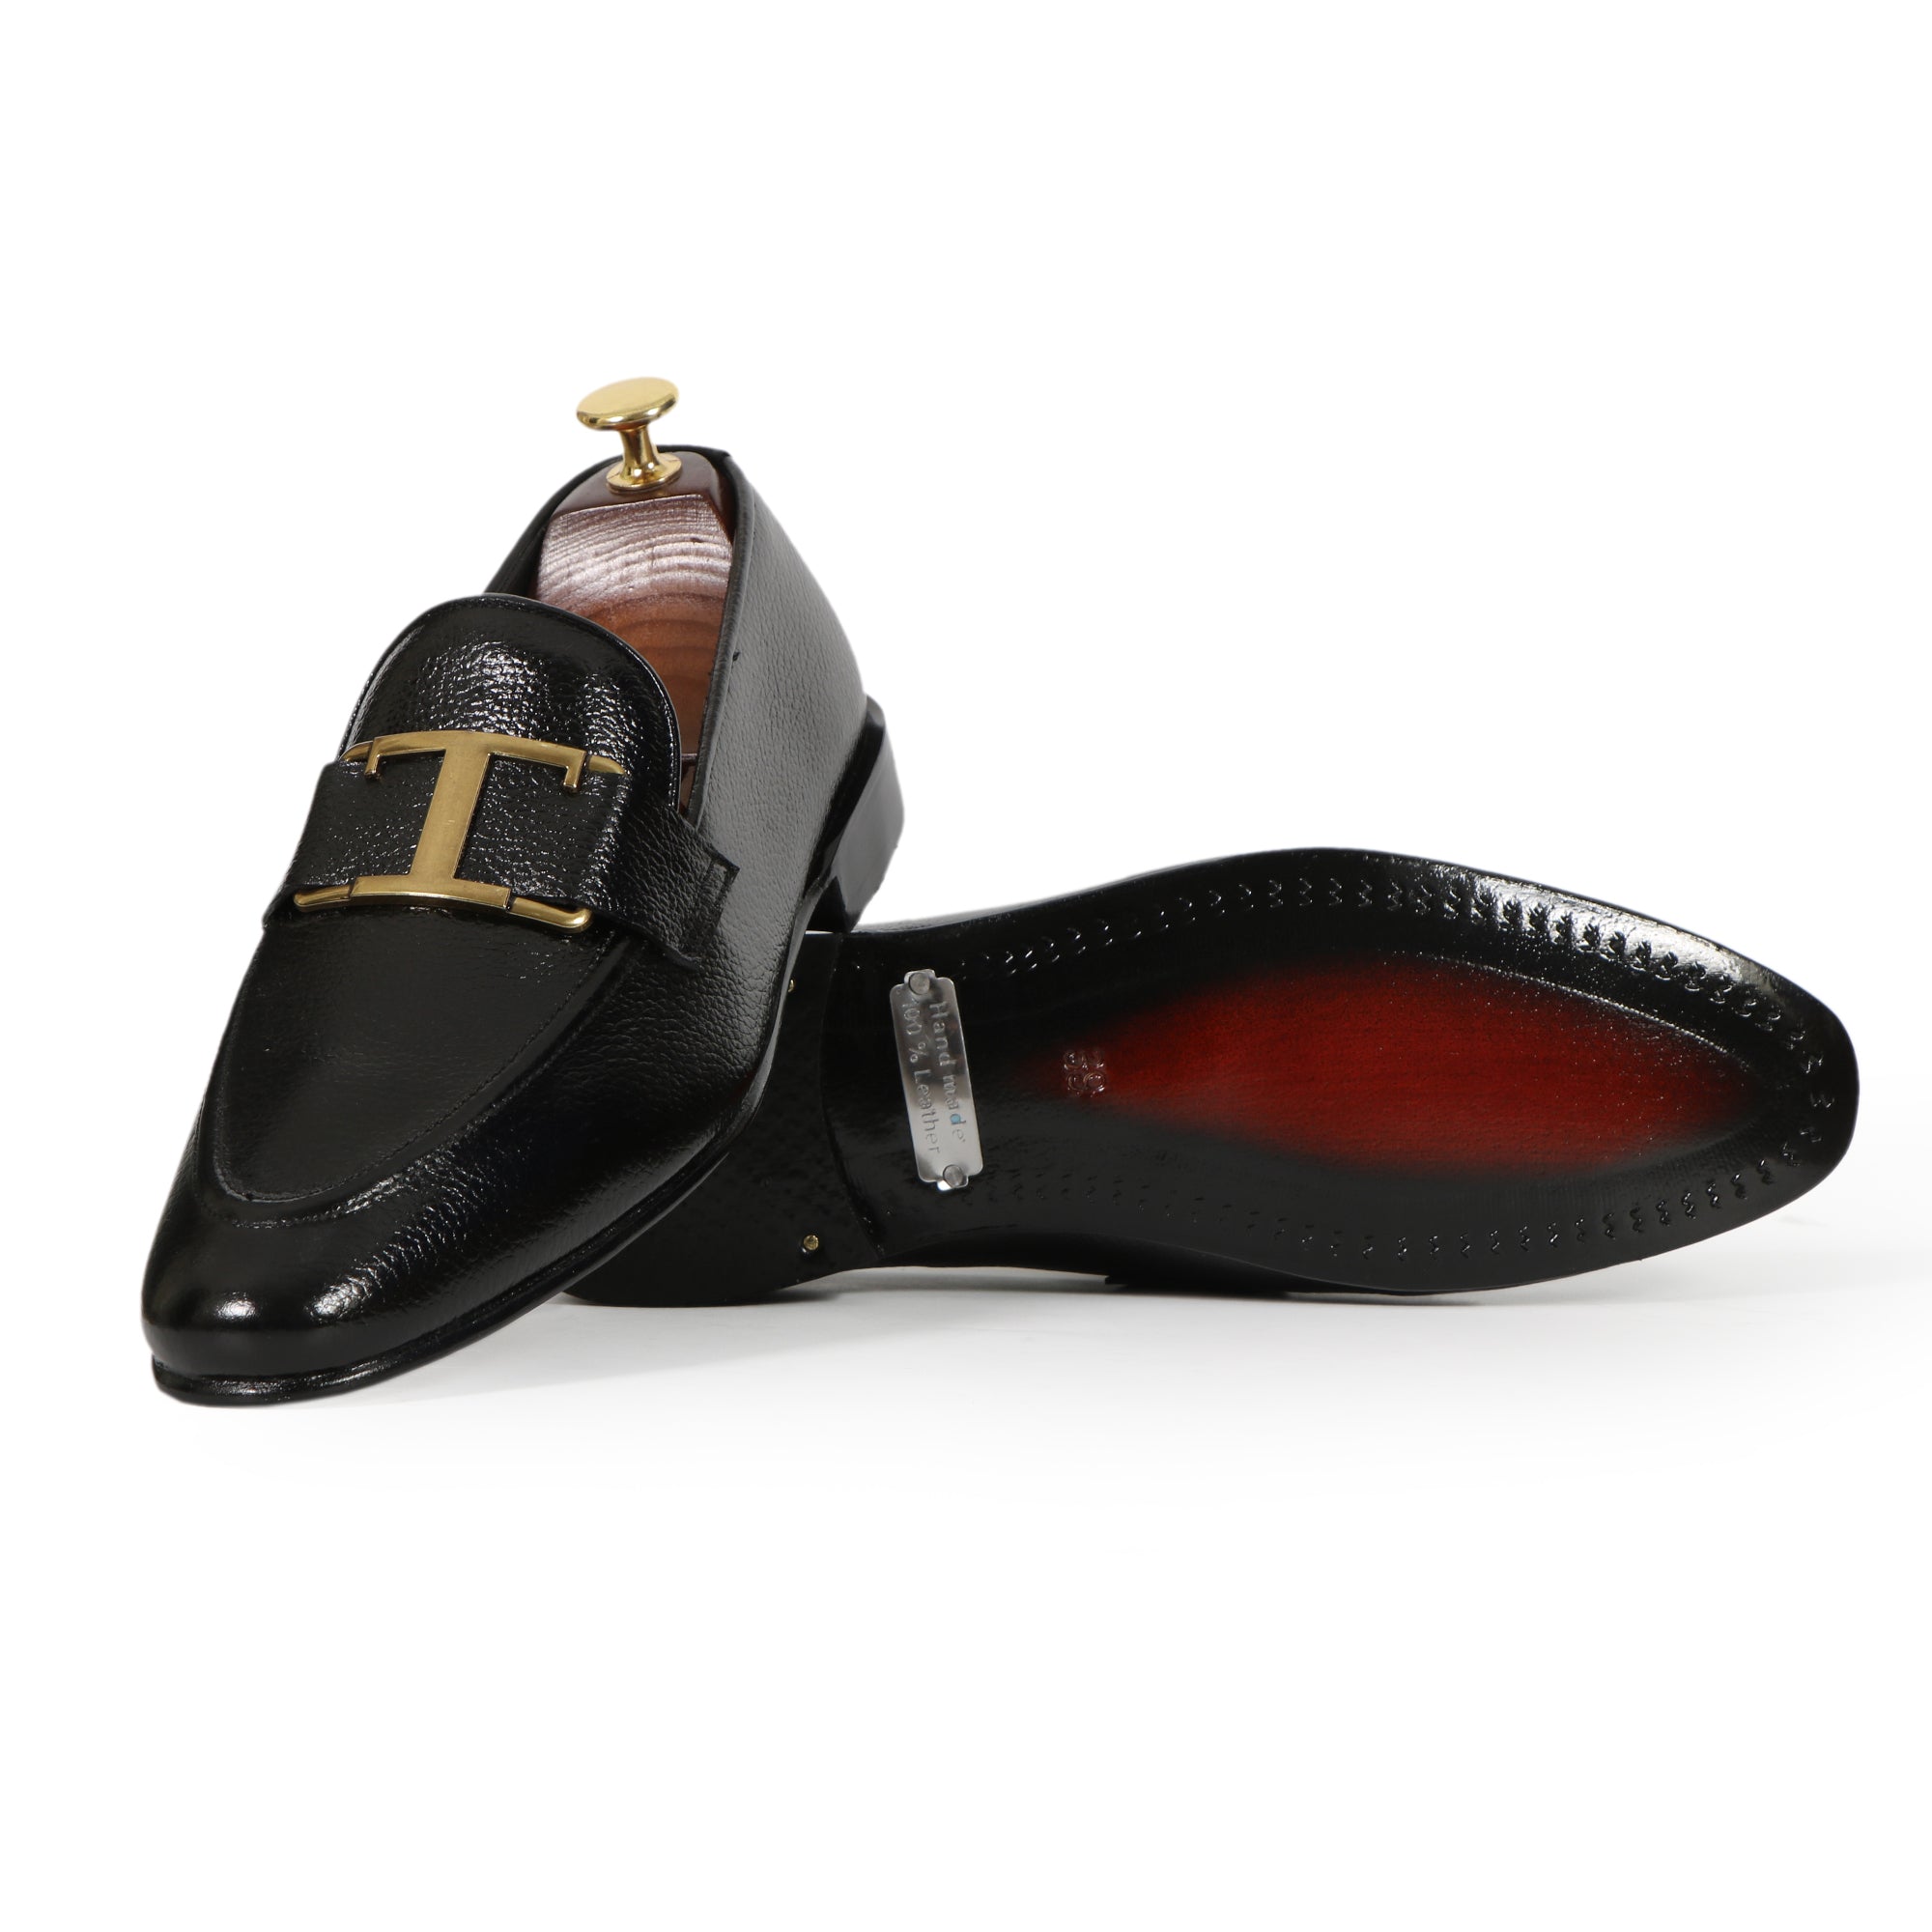 Mild Gold Black - Premium Shoes from royalstepshops - Just Rs.9000! Shop now at ROYAL STEP